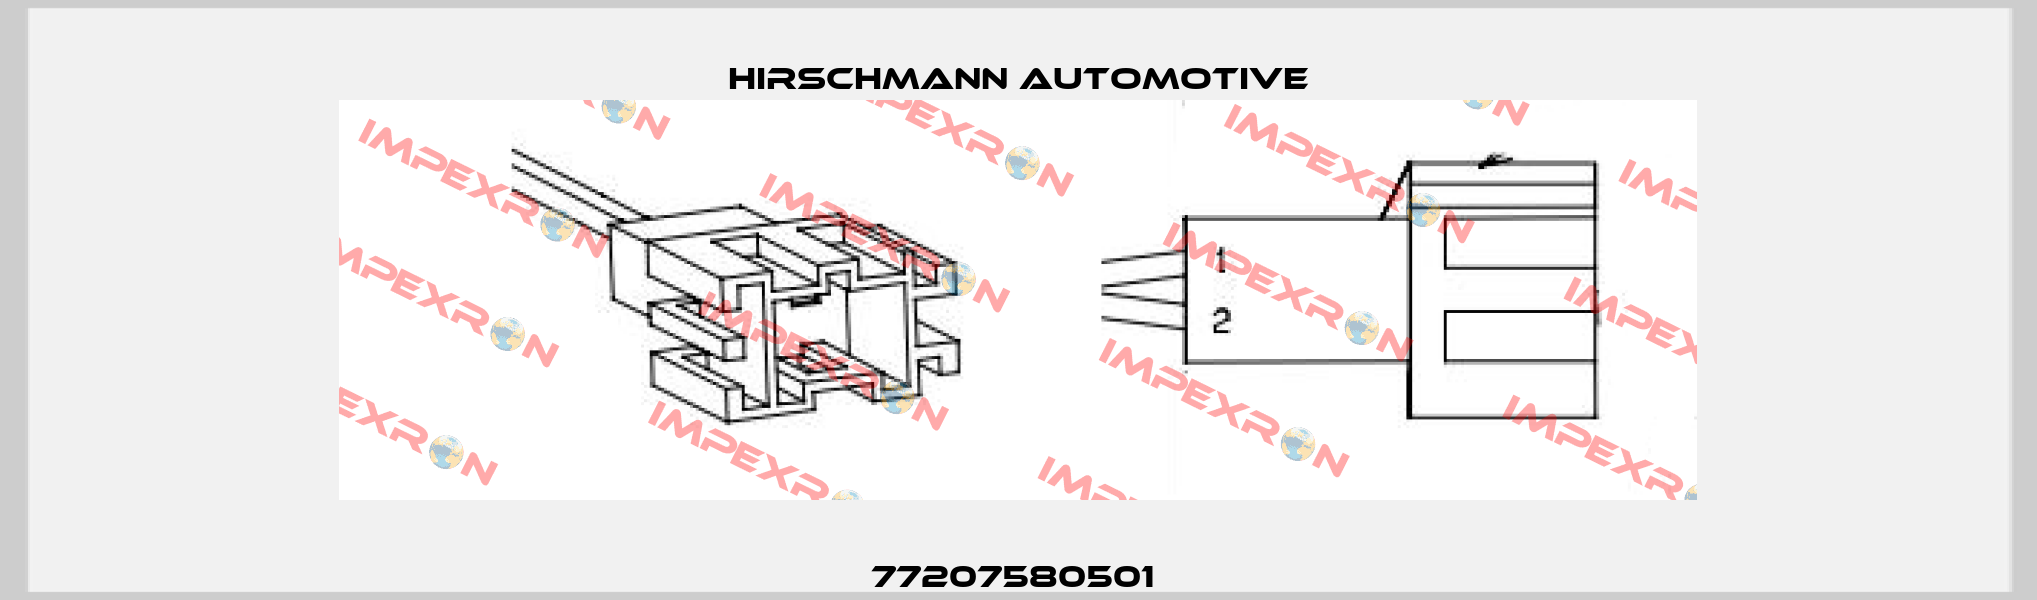 77207580501  Hirschmann Automotive